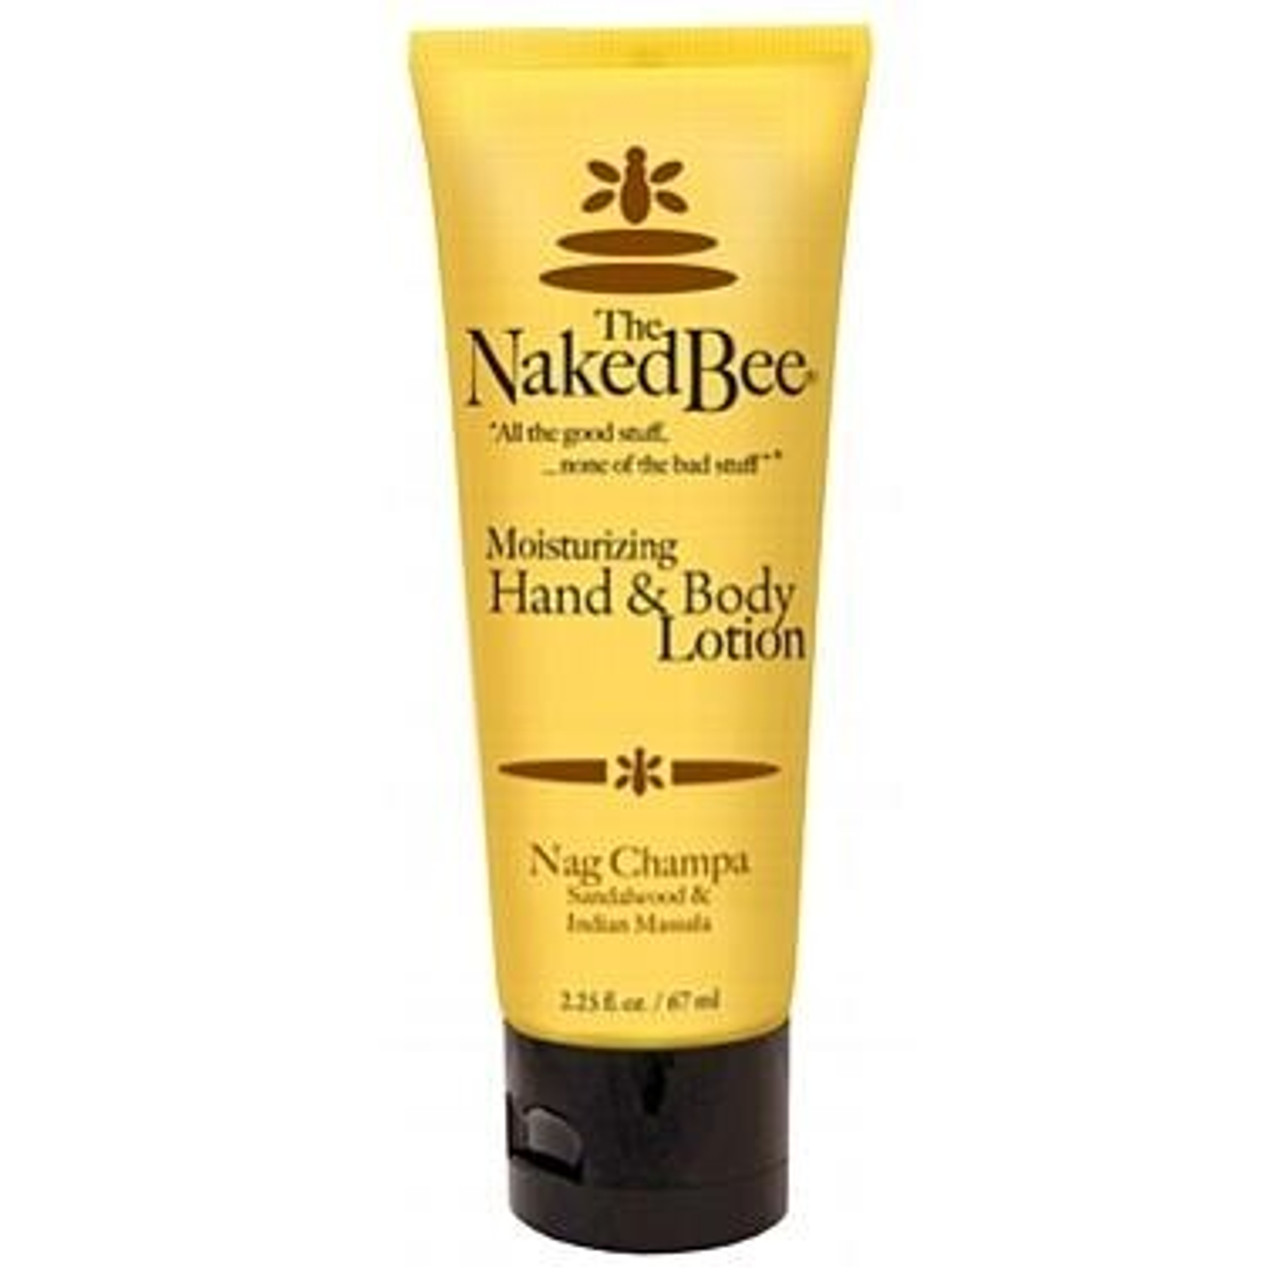 Naked Bee Nag Champa Hand and Body Lotion - 2.25 oz tube